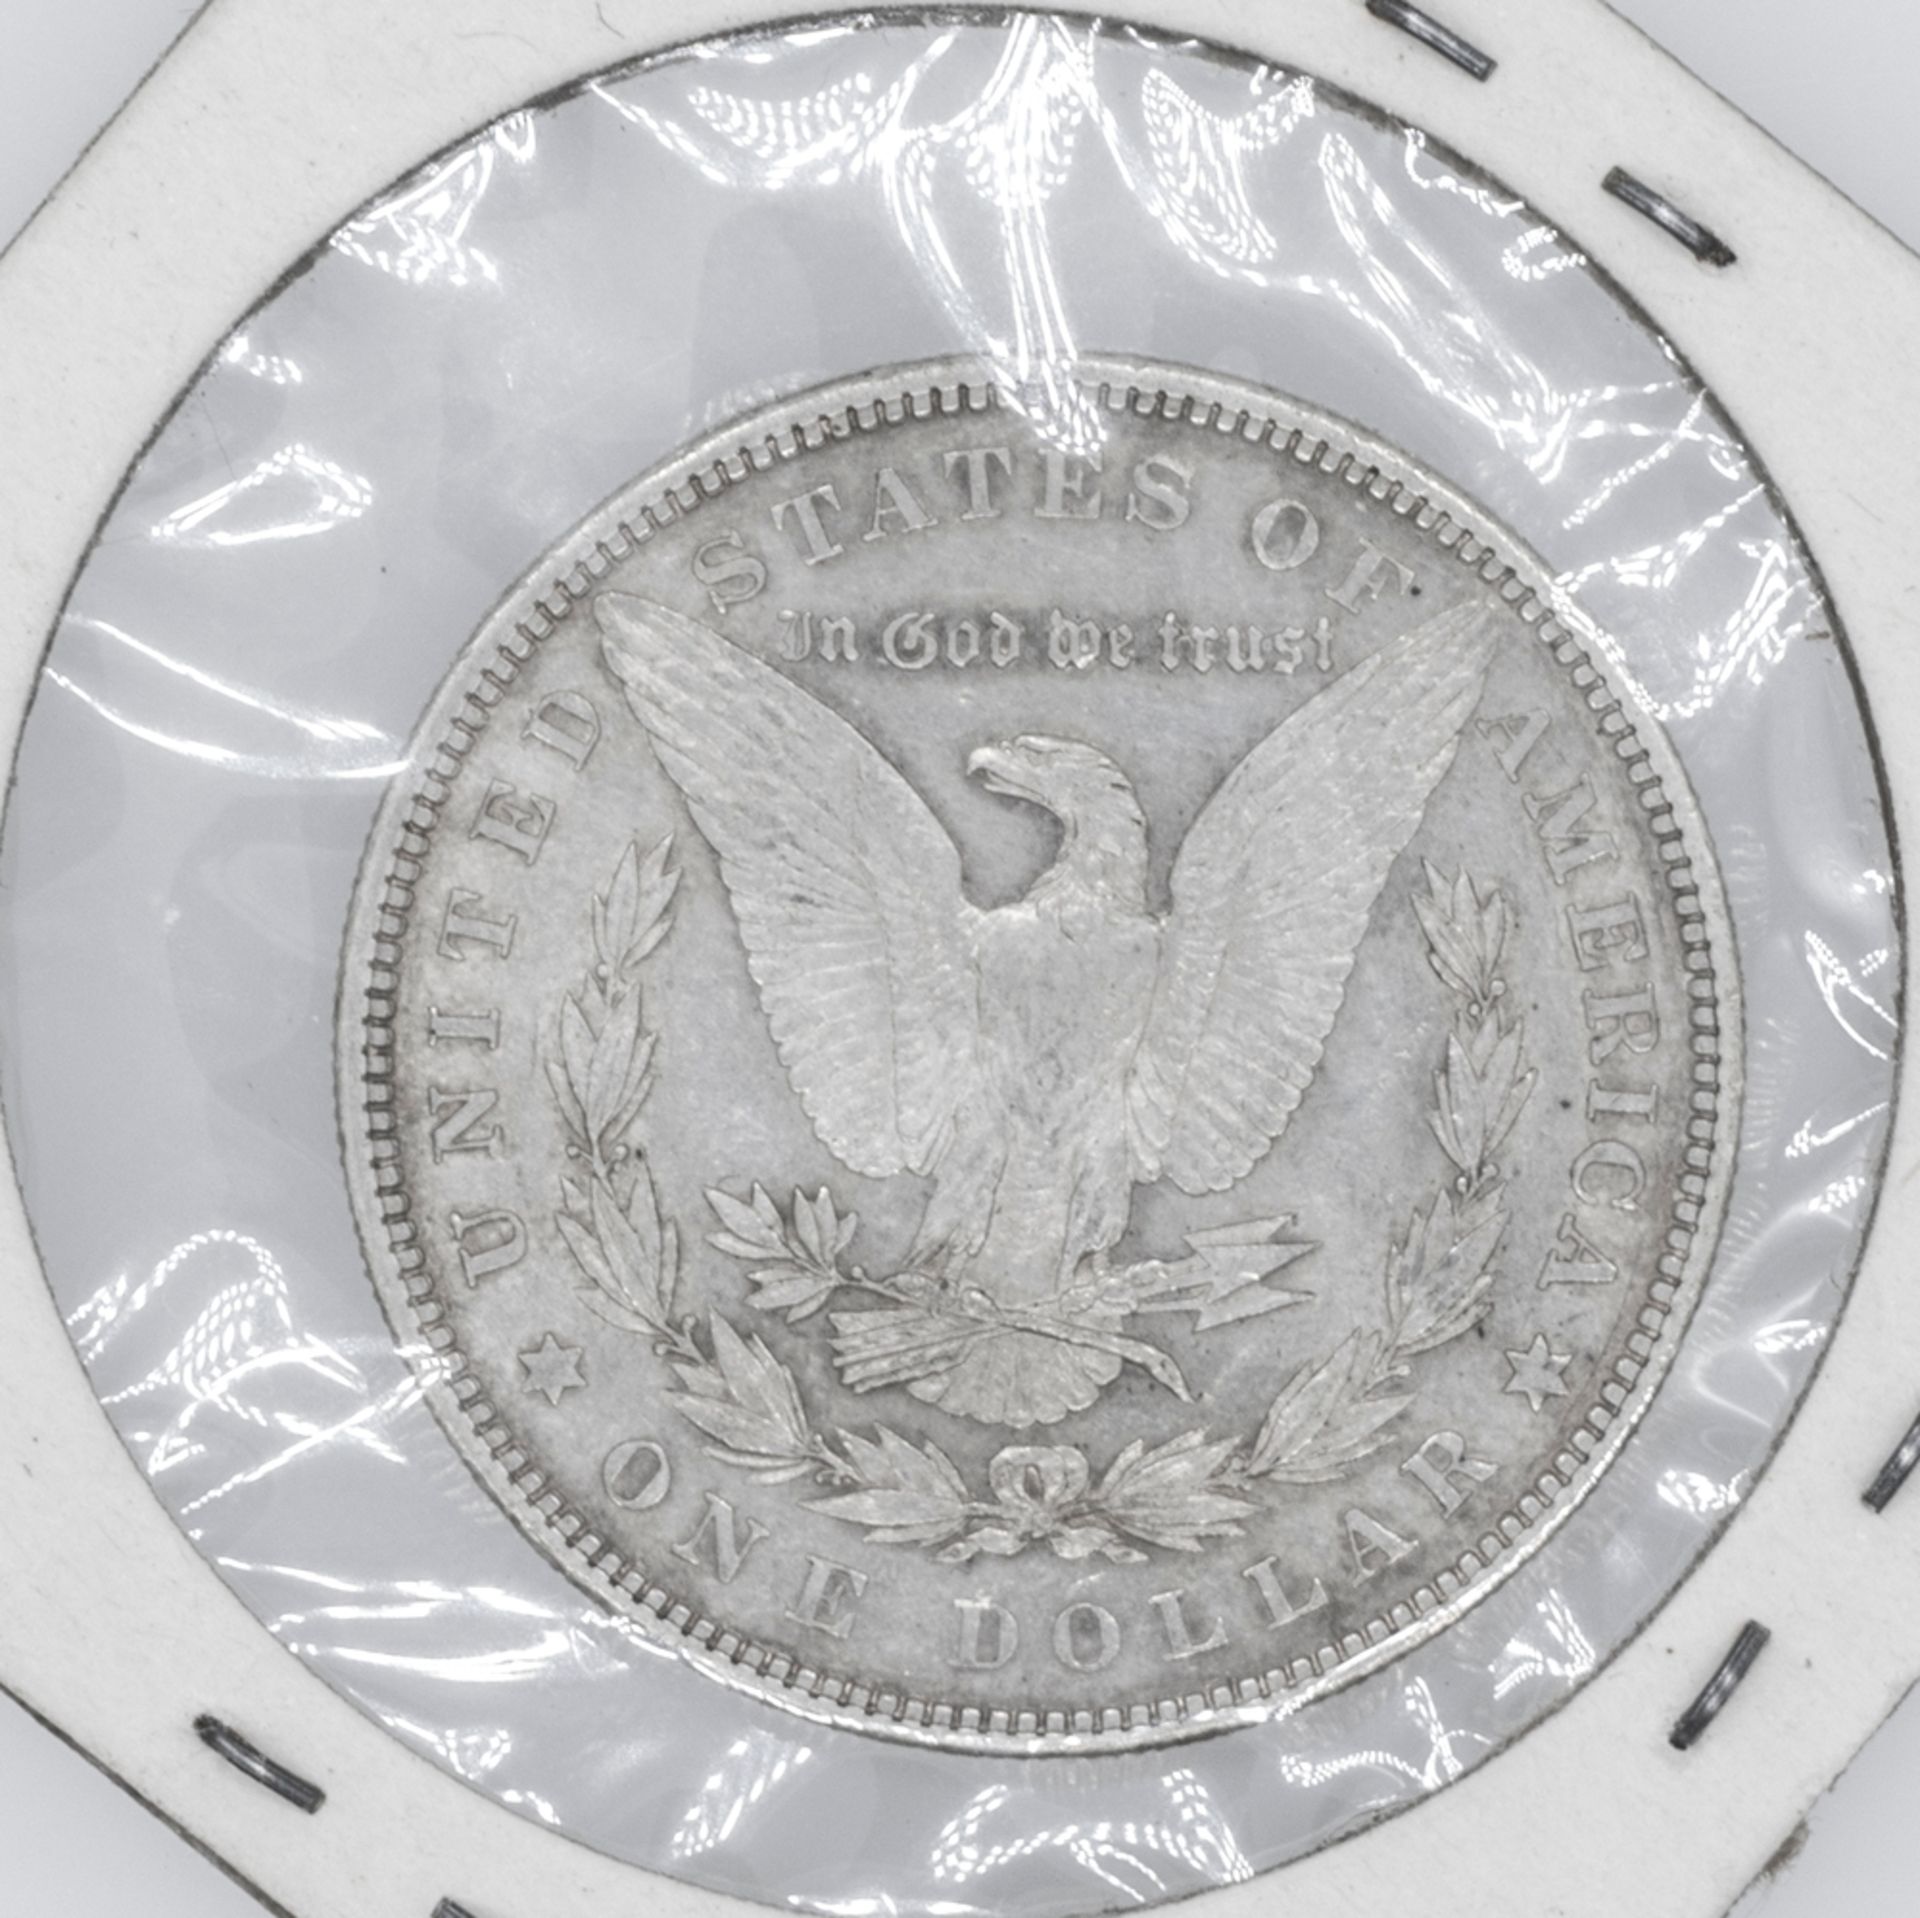 USA 1903, Morgandollar. Silber. Erhaltung: ss. - Bild 2 aus 2